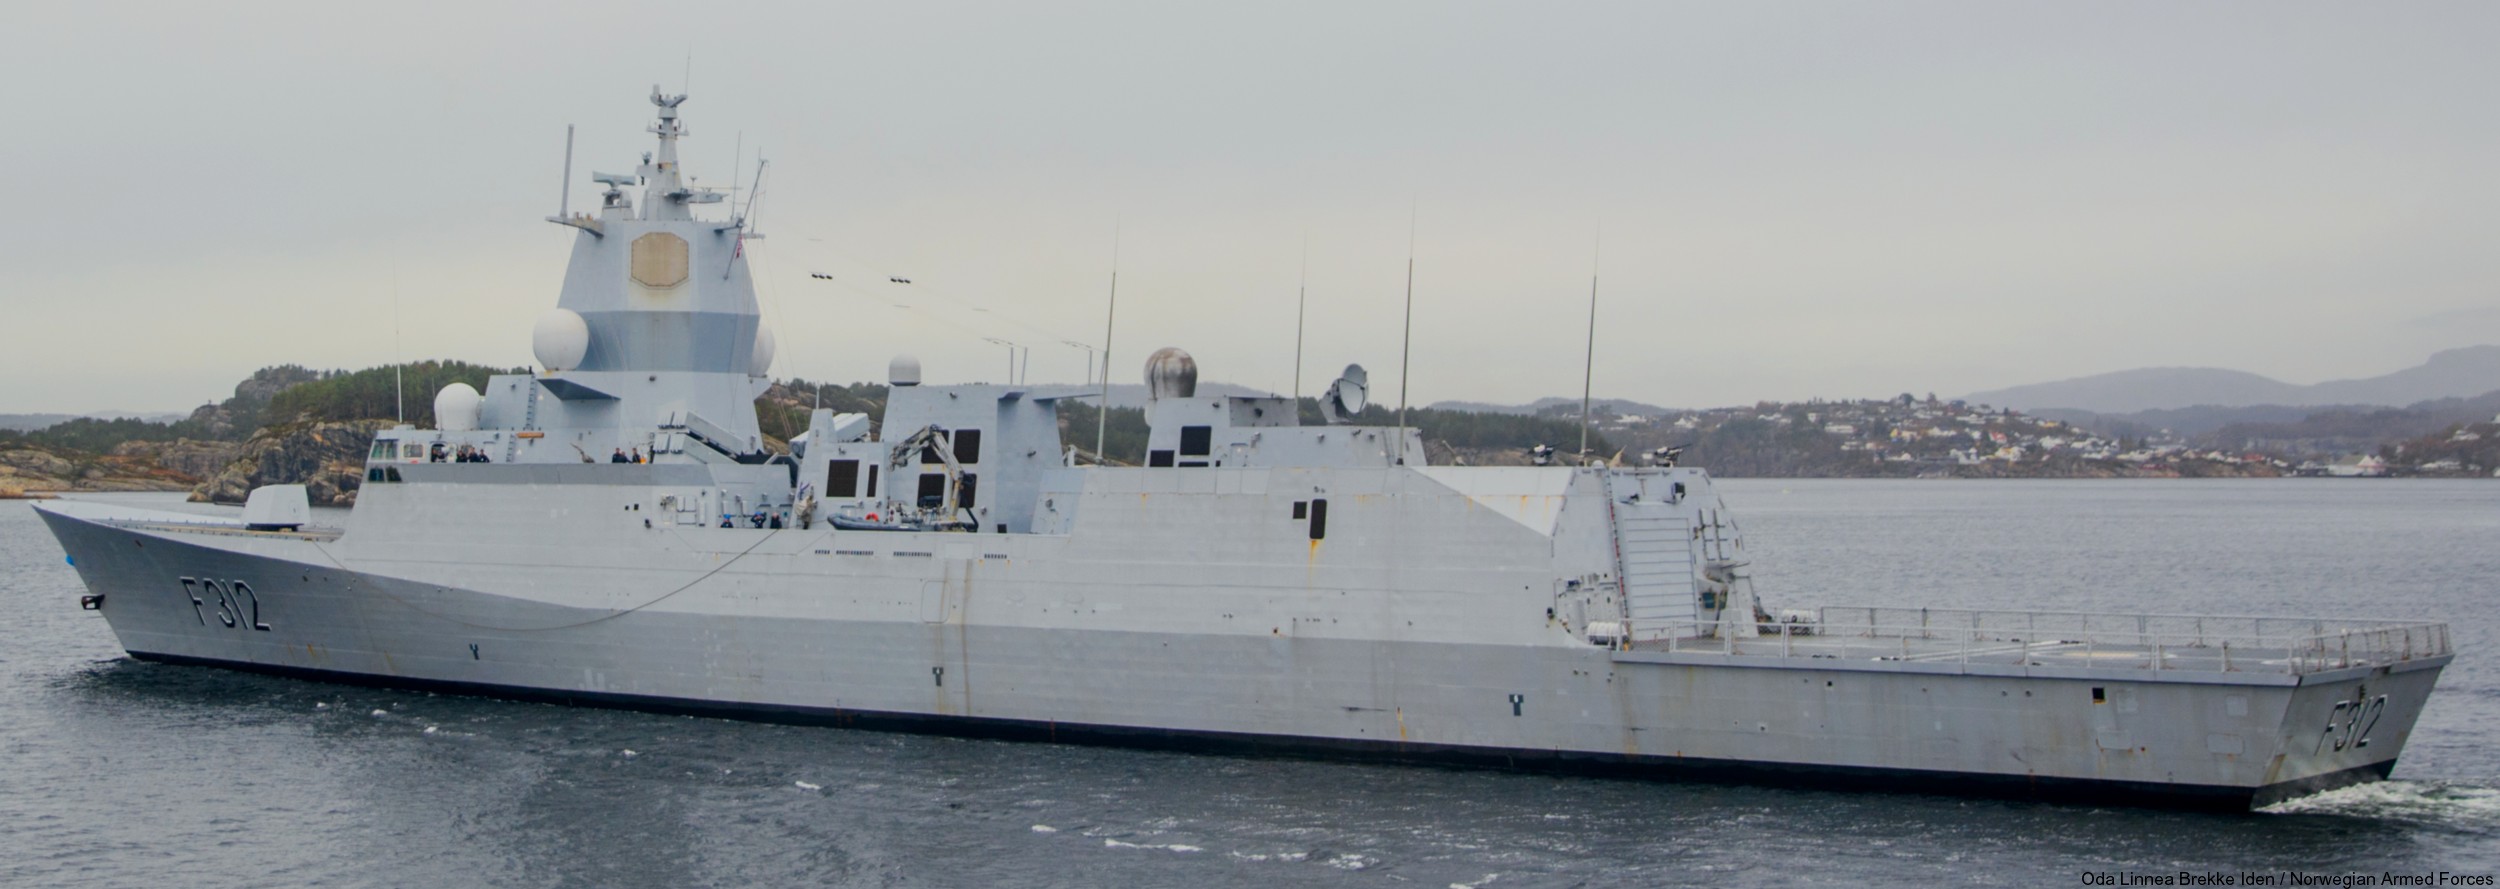 f-312 otto sverdrup hnoms knm fridtjof nansen class frigate royal norwegian navy 02